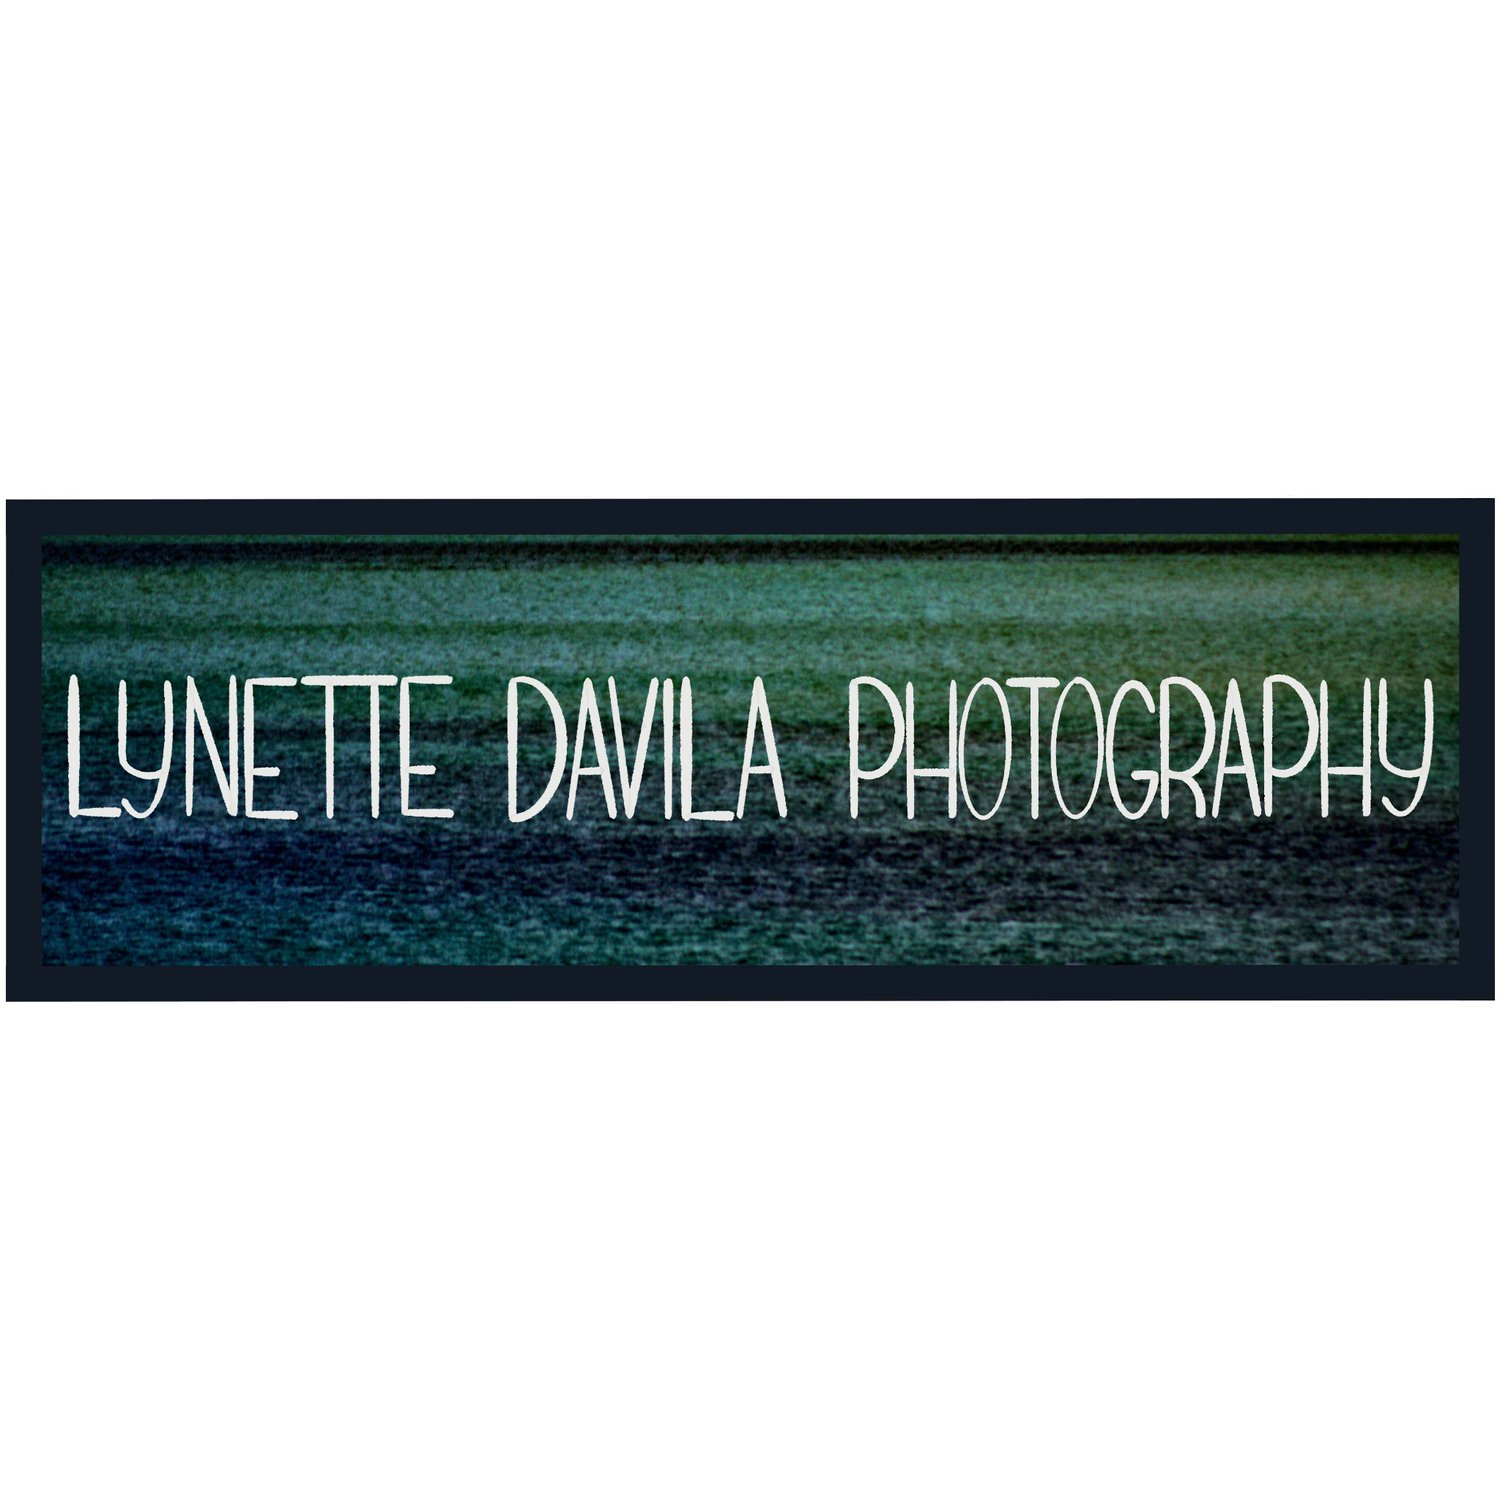 LYNETTE DAVILA PHOTOGRAPHY